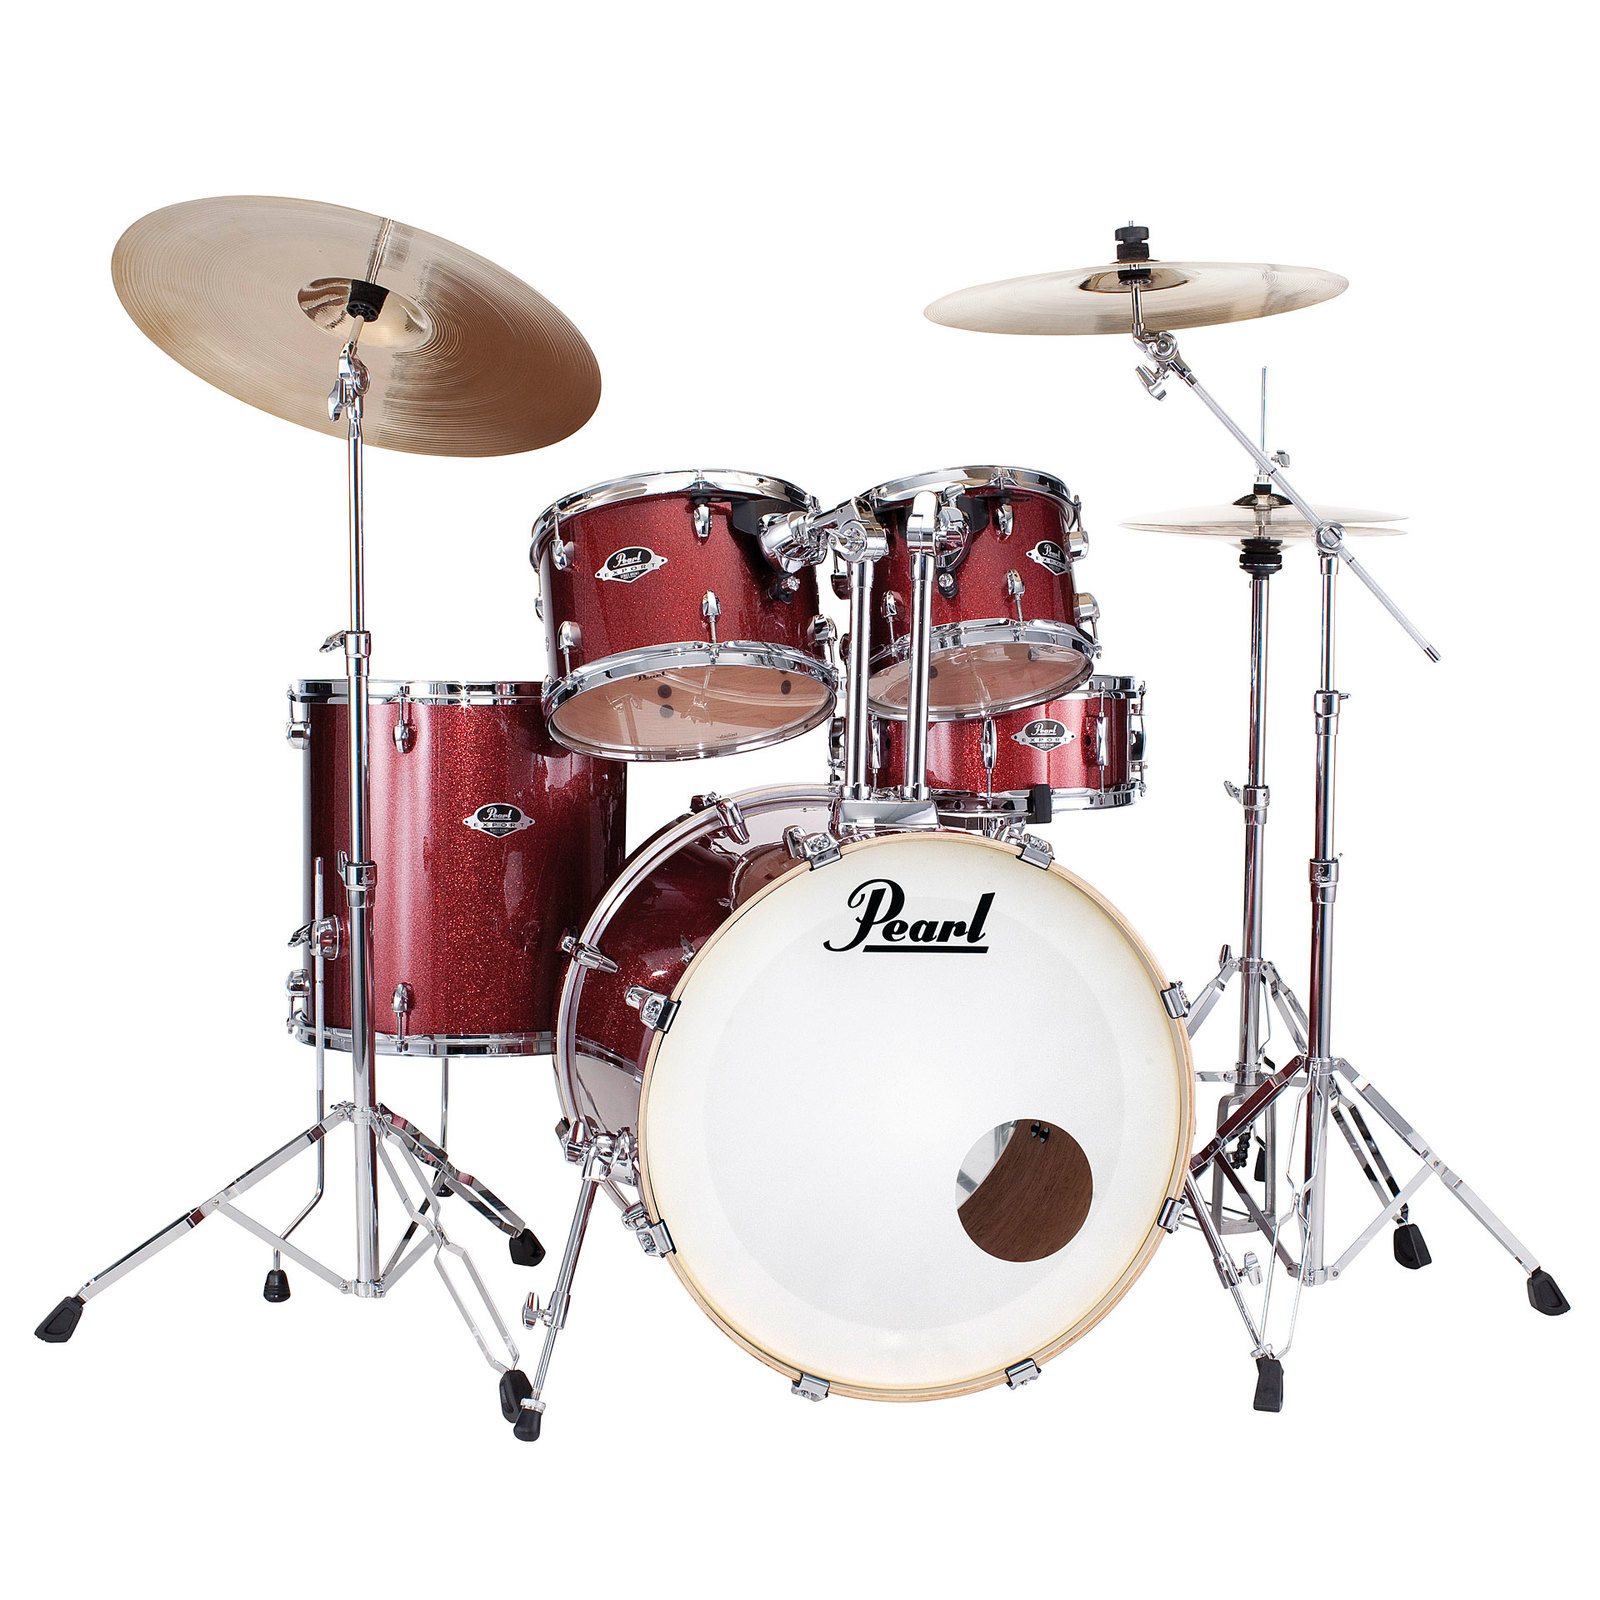 fpc drum kits free